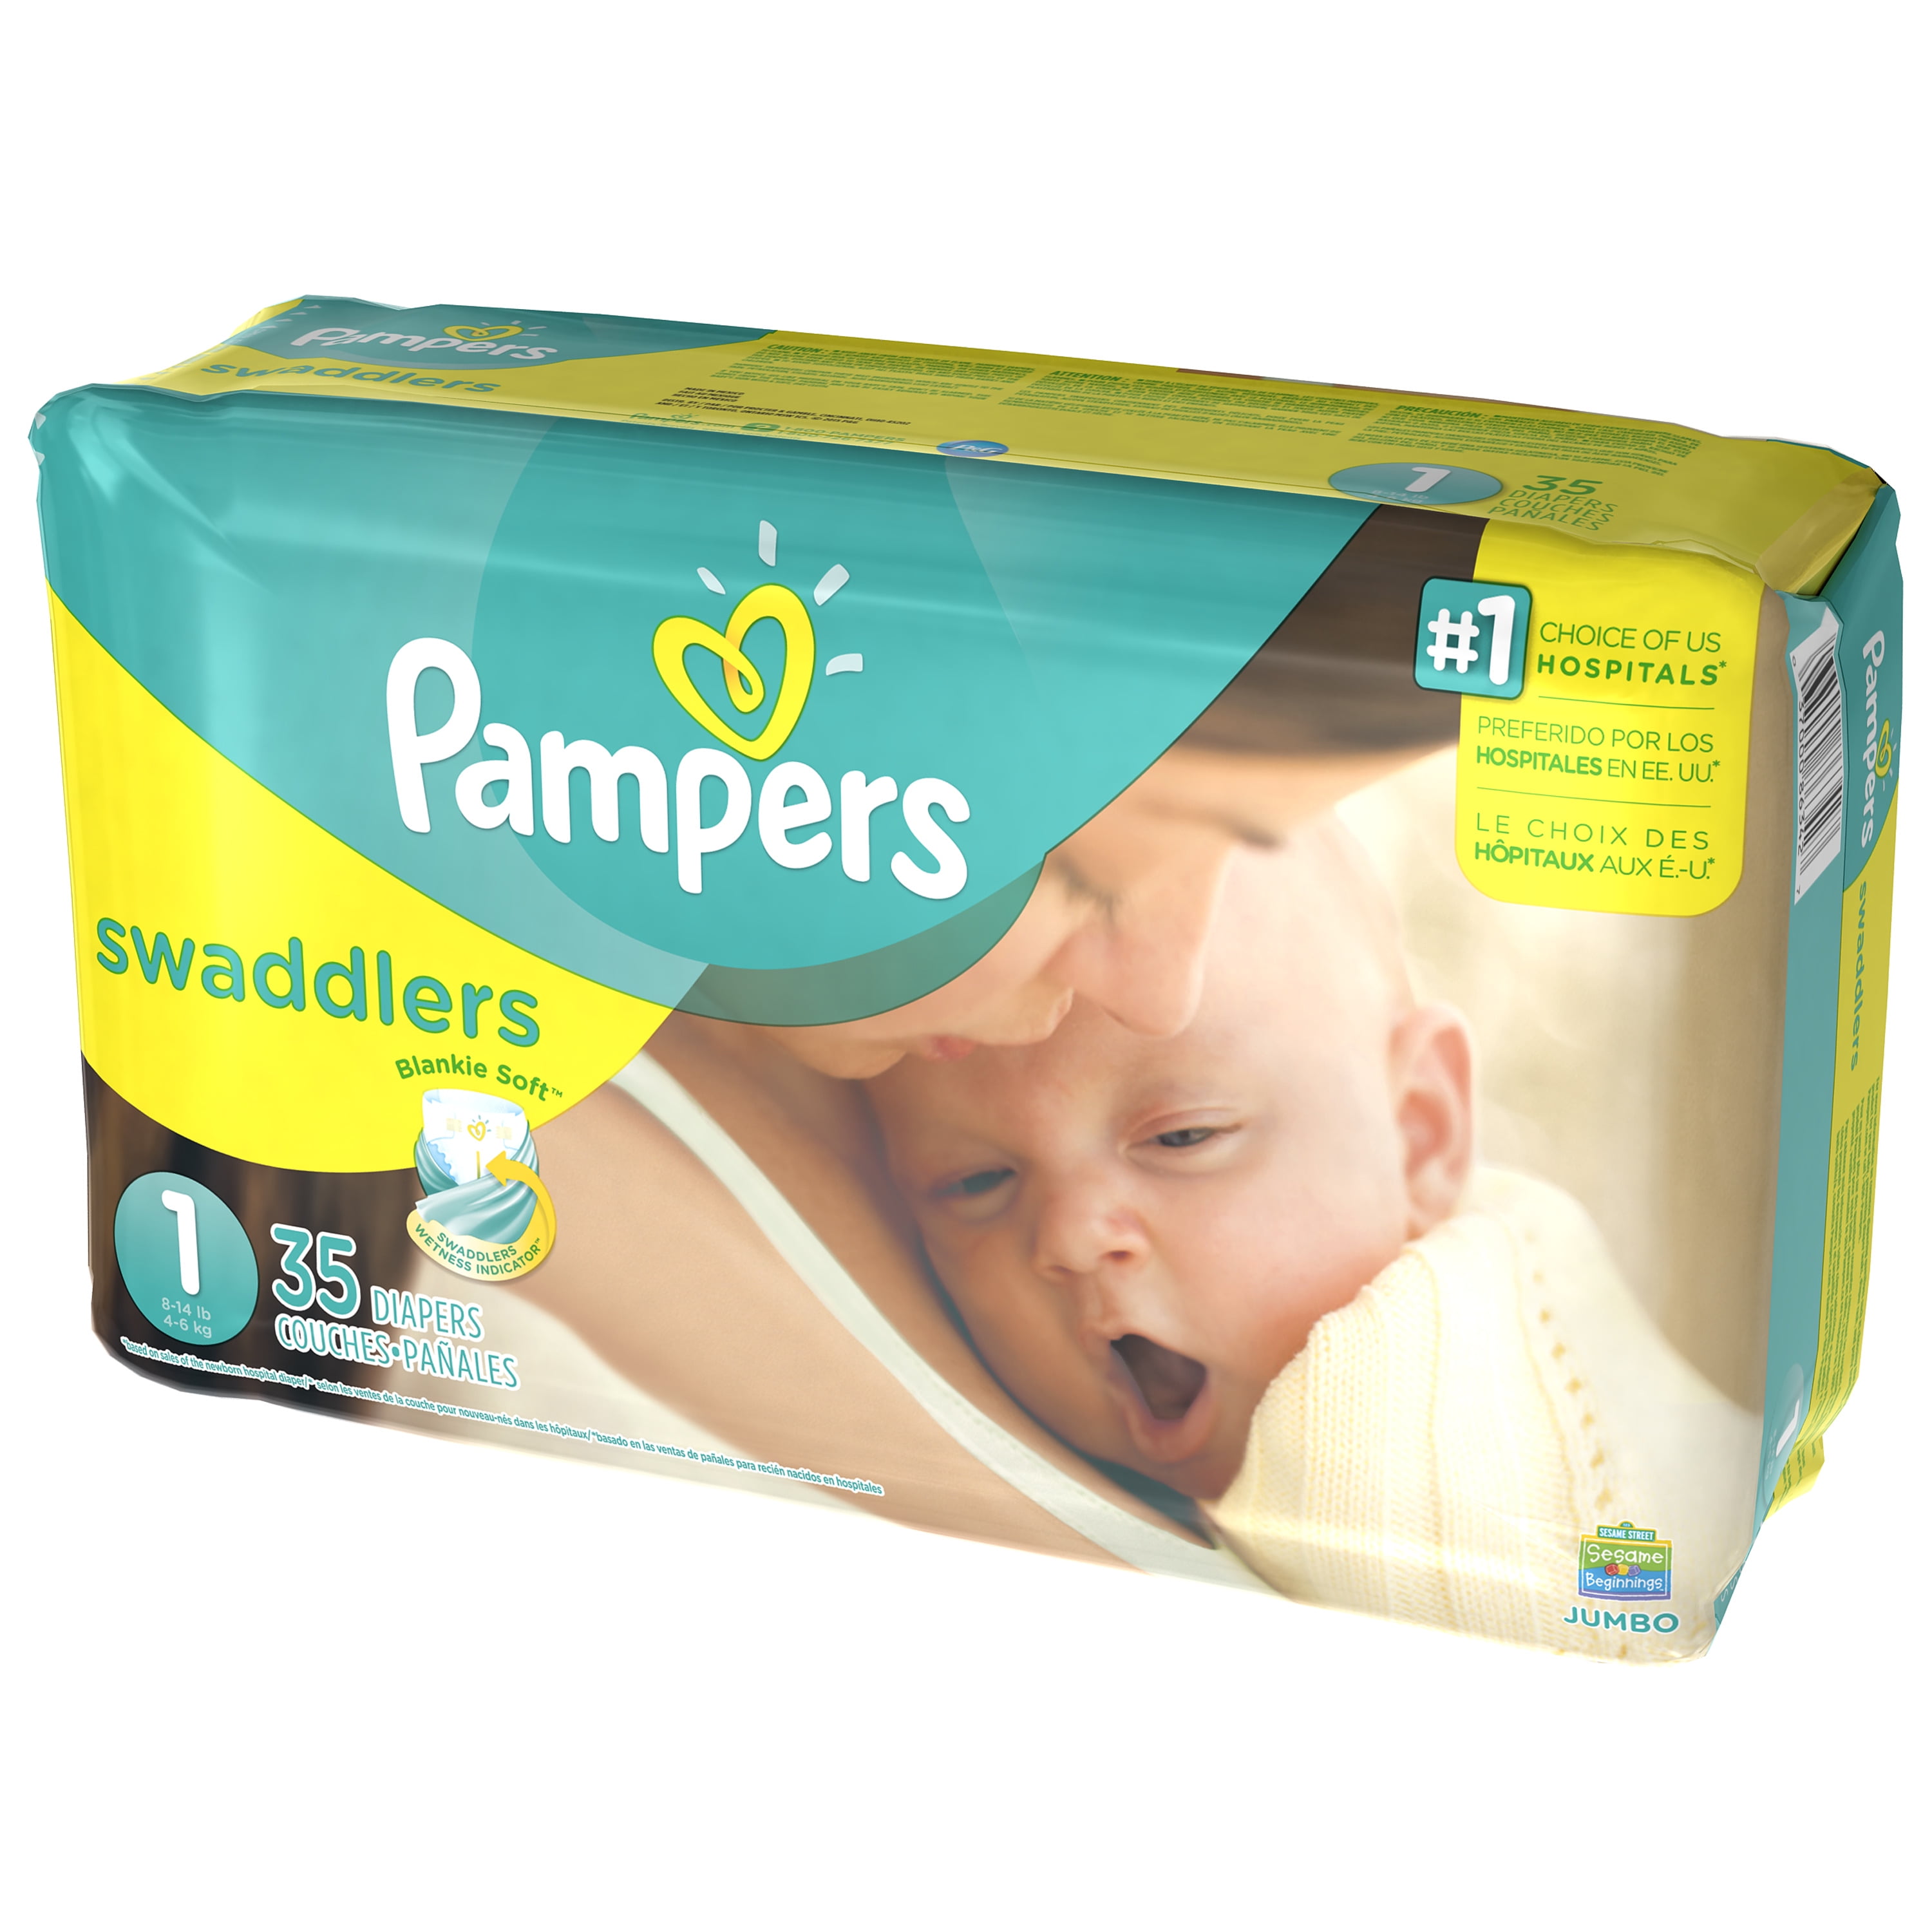 Huggies Little Snugglers Diapers Size 1 (8-14LB) Jumbo 32CT